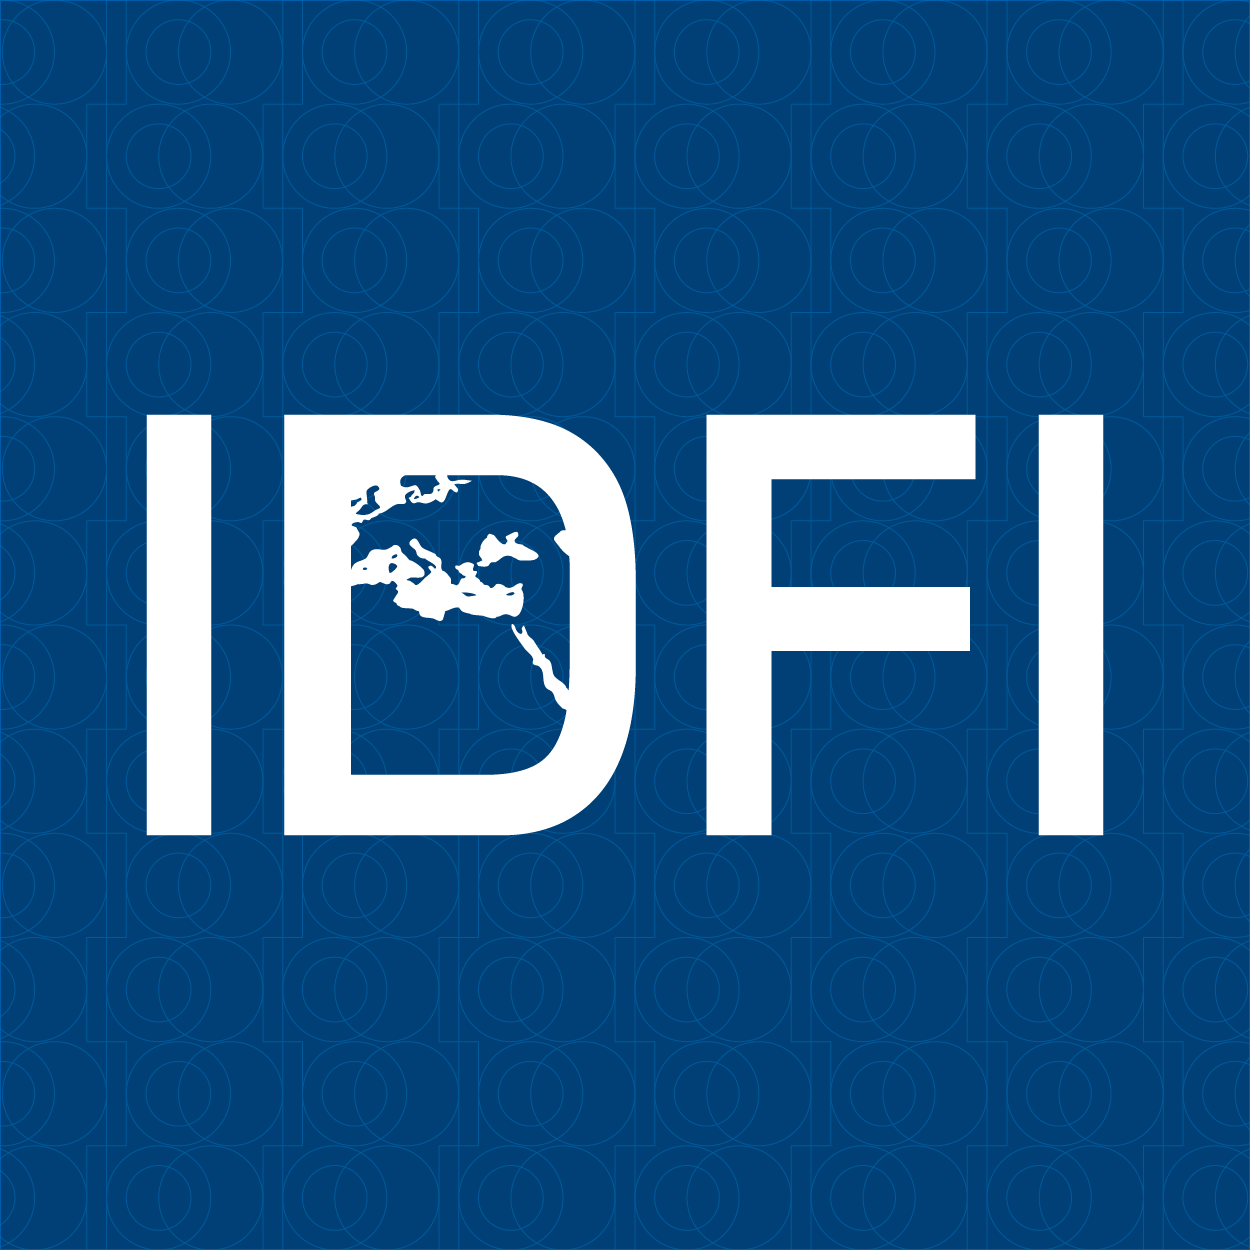 IDFI გაეროს უნივერსალური პერიოდული მიმოხილვის წინასასესიო შეხვედრაზე მოხსენებით წარსდგა